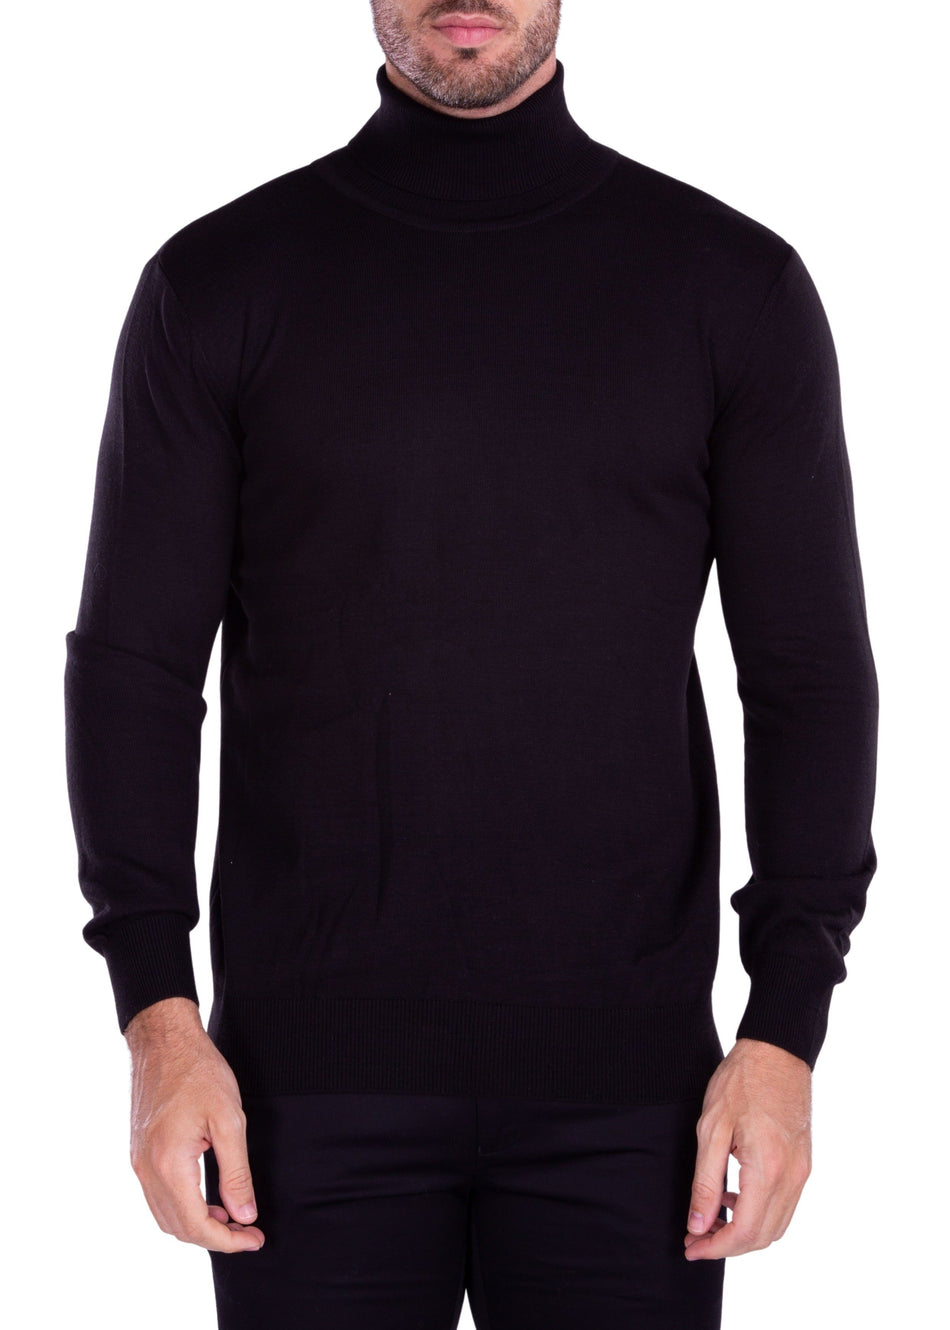 215100 - Black Turtleneck Sweater